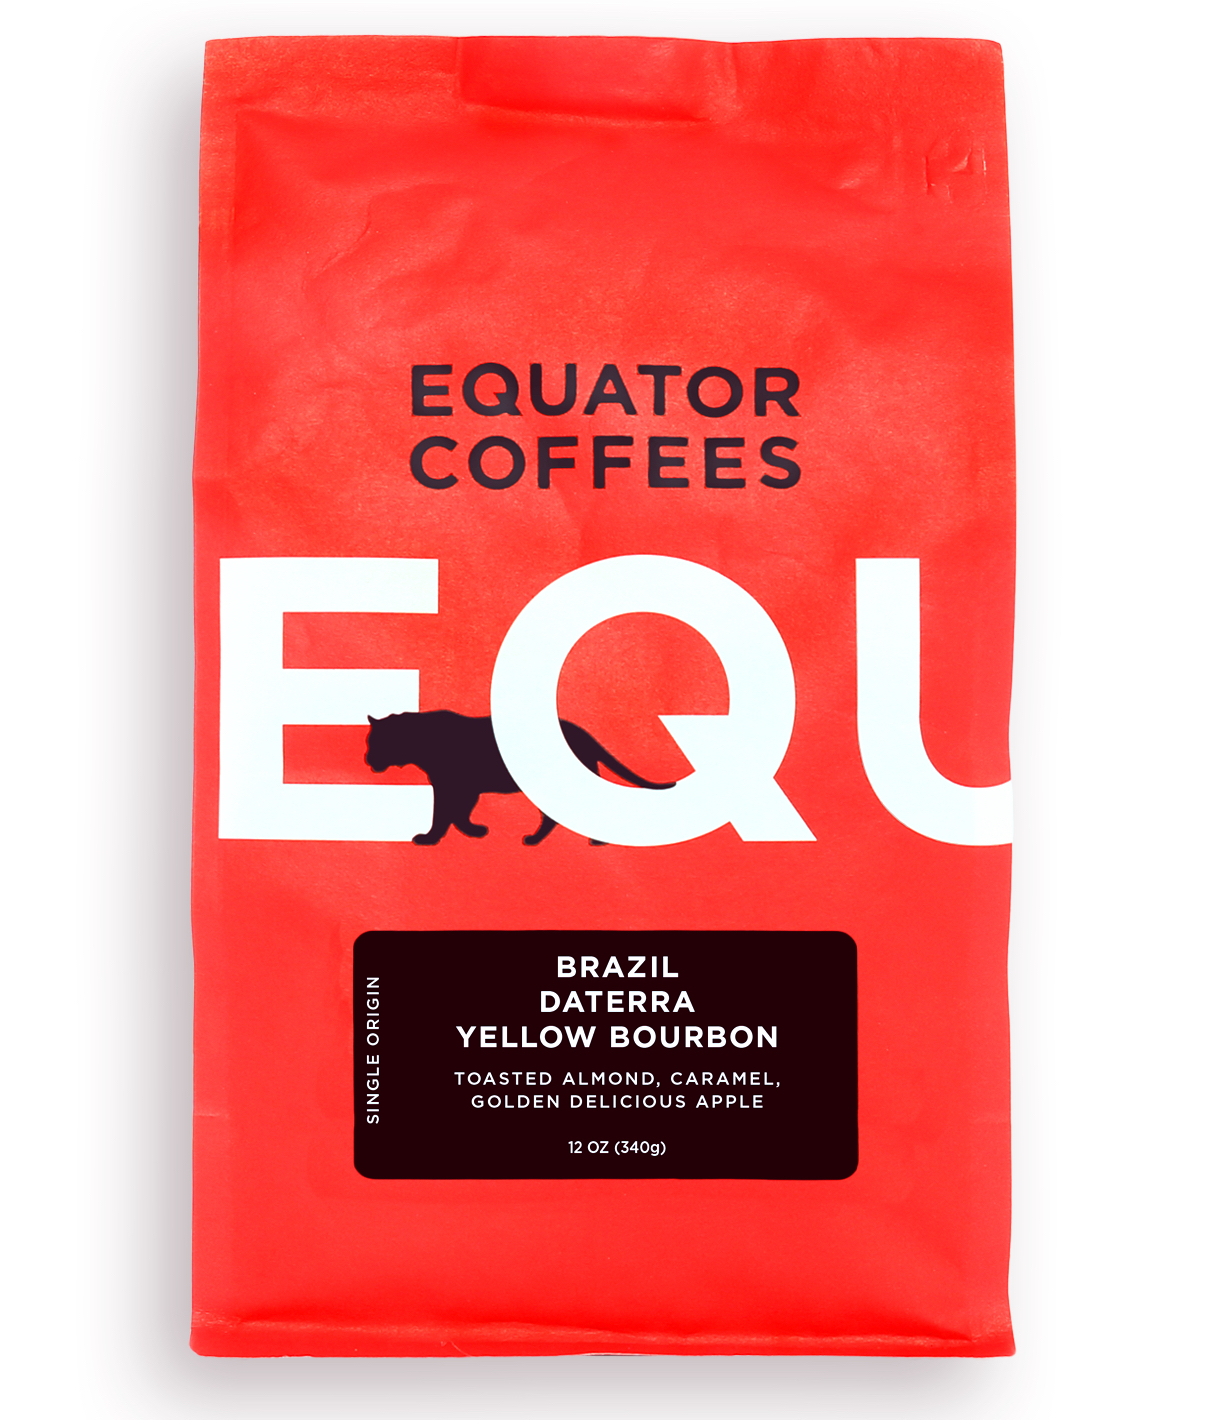 Equator Coffees Brazil Yellow Bourbon Daterra